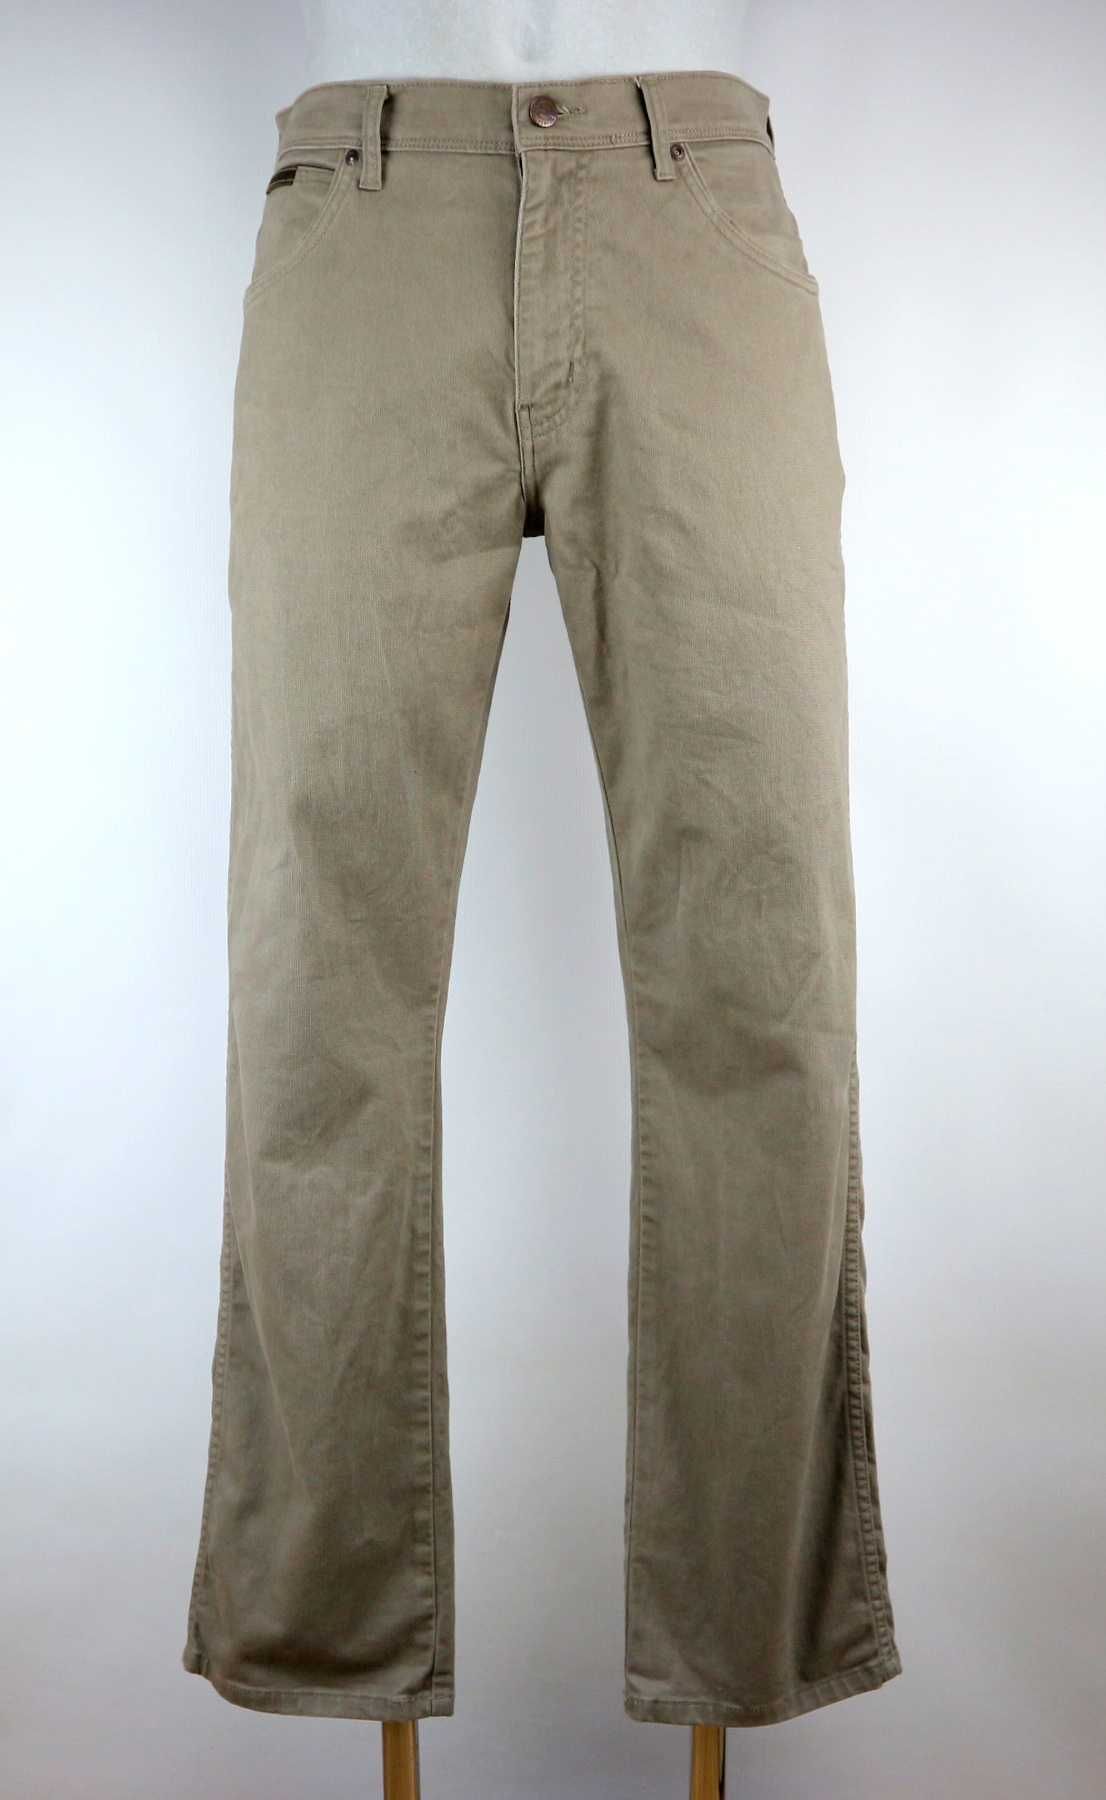 Wrangler Texas Stretch spodnie jeansy W33 L30 pas 2 x 42 cm